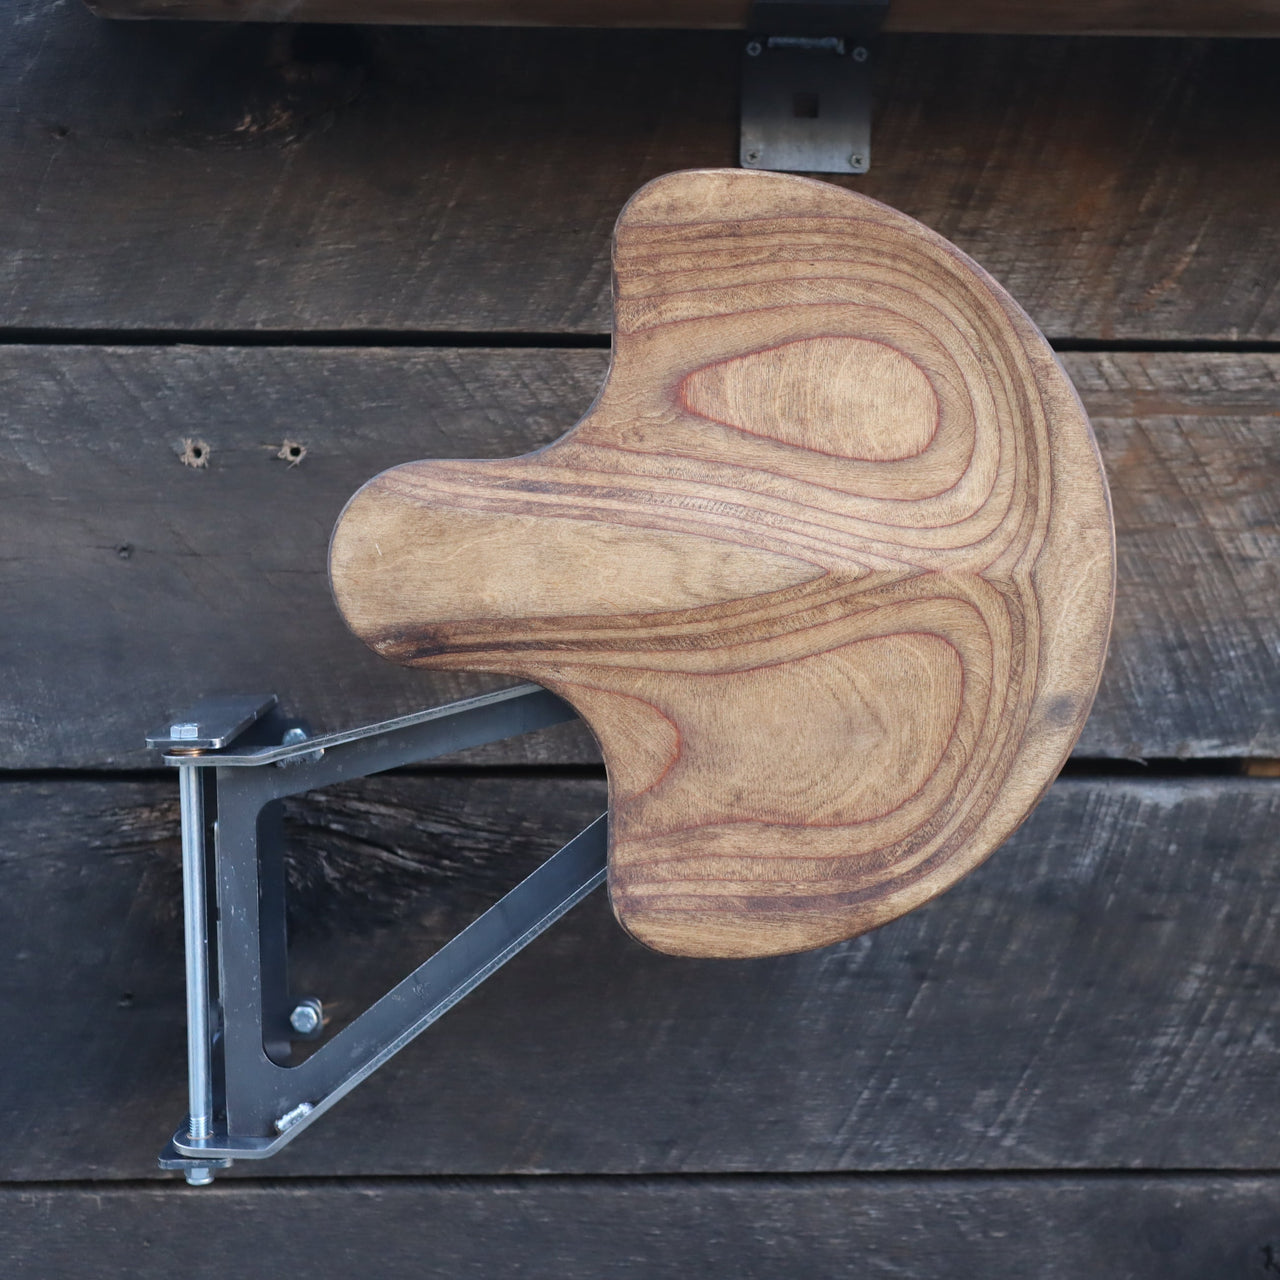 Metal Swing Away Bar Stool With Wooden Seat  - 12.5" Swing Arm - Personalized Monogram Design